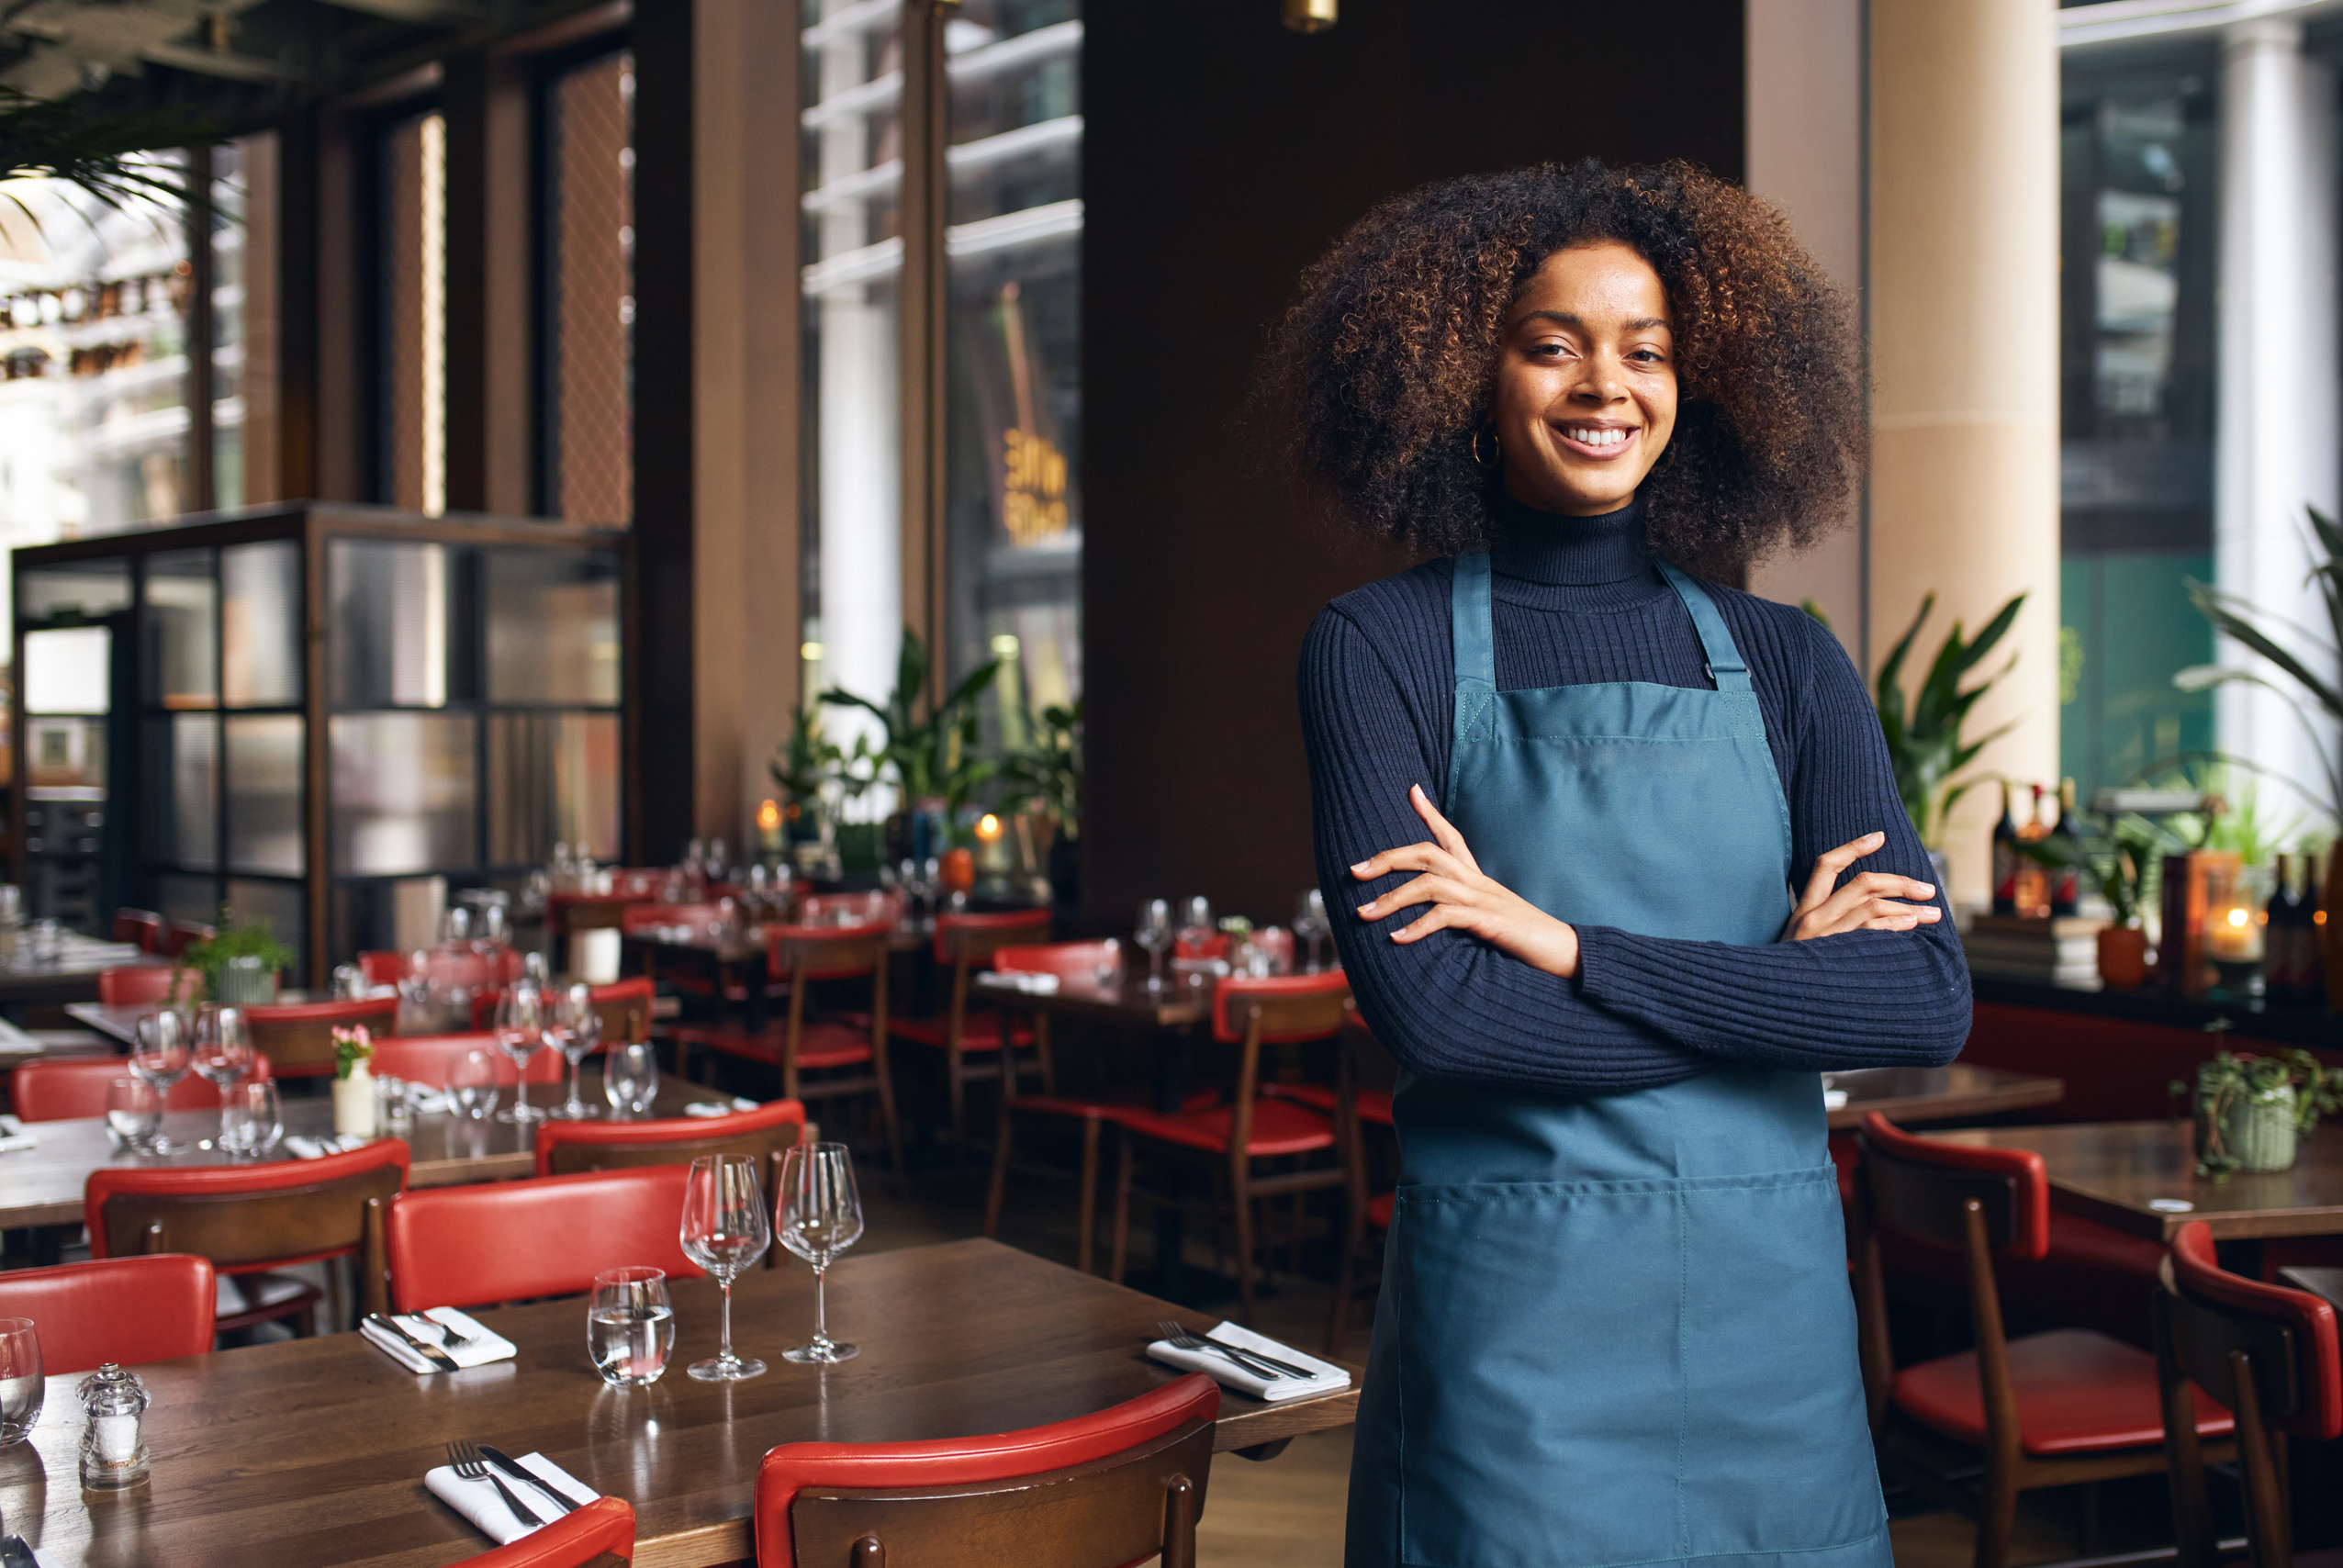 Female Small Business Owner in Restaurant